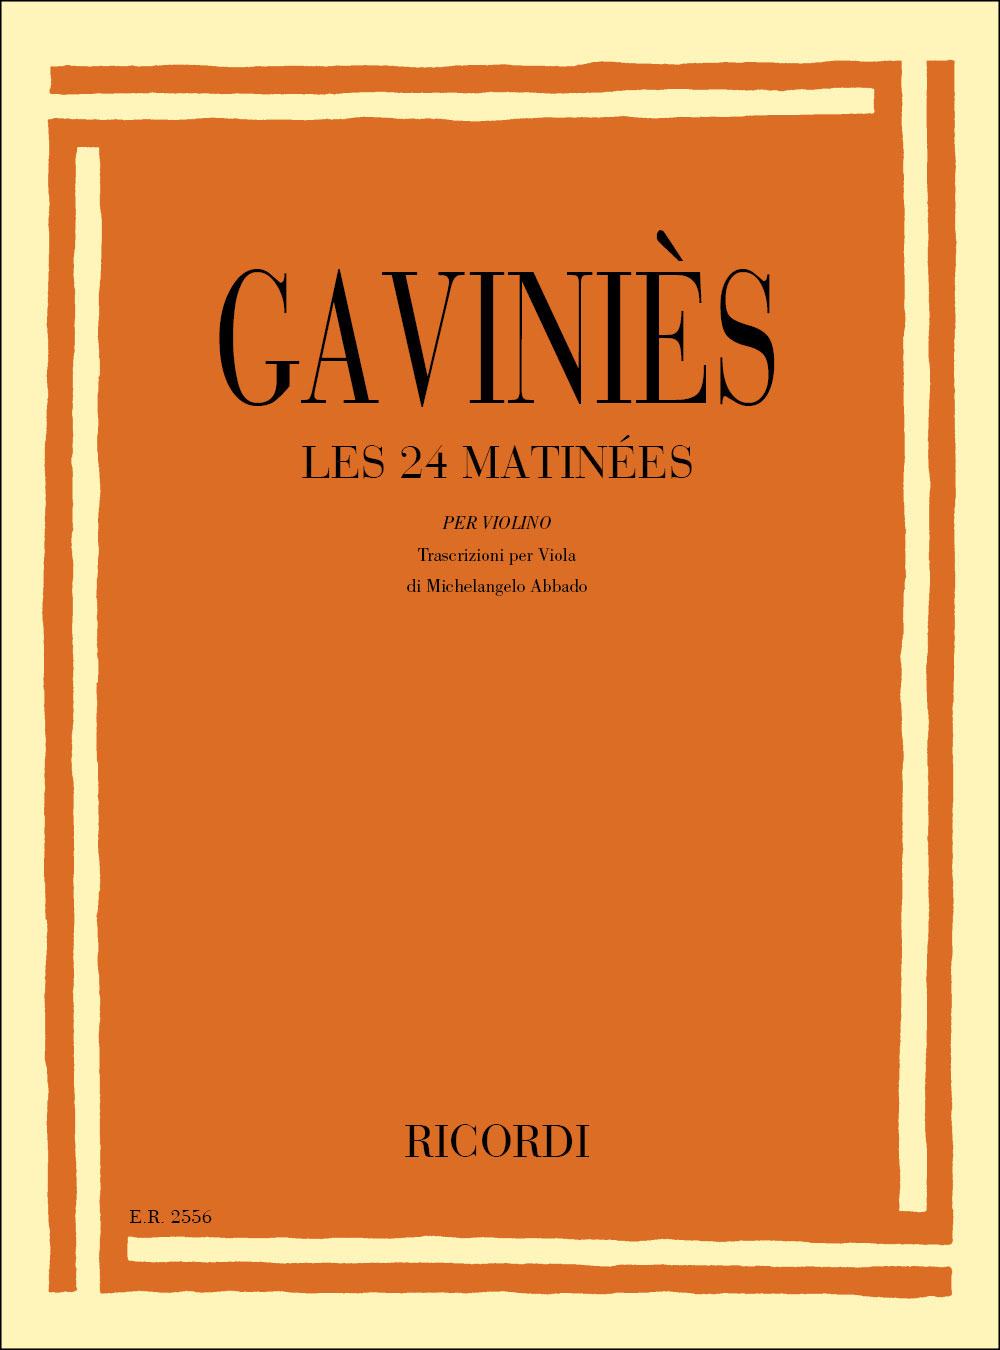 RICORDI GAVINIES P. - 24 MATINEES PER VIOLINO - ALTO